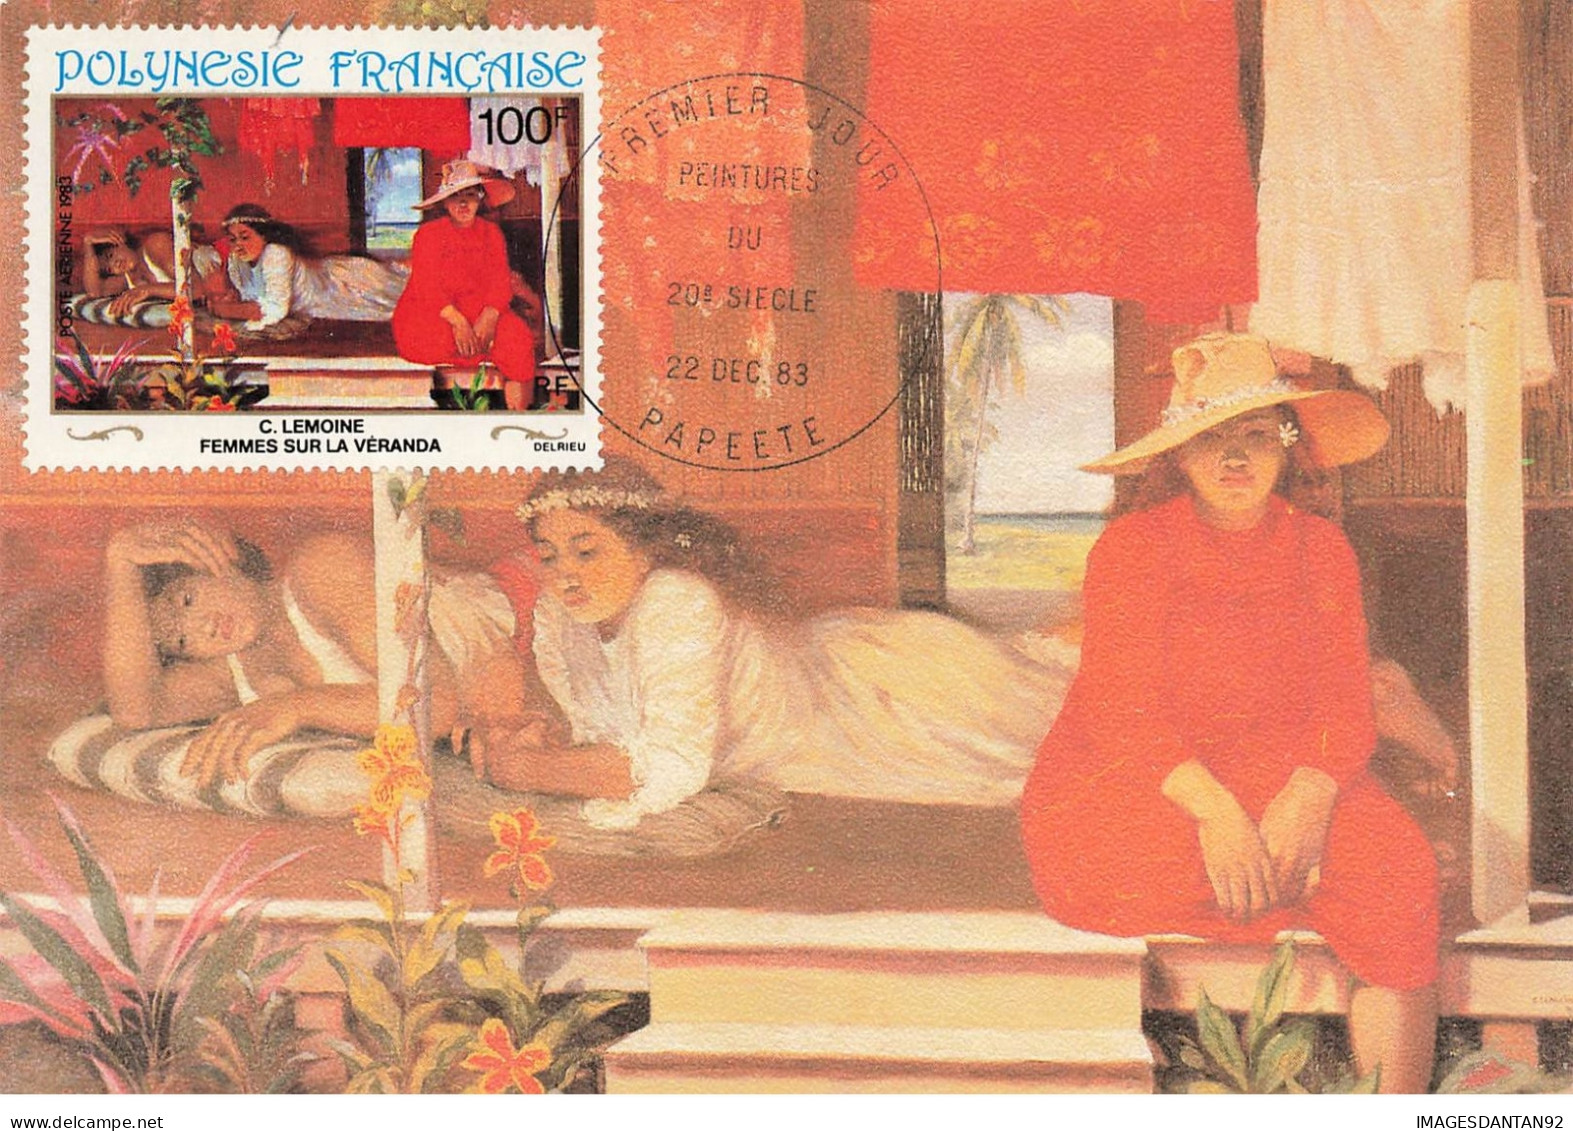 CARTE MAXIMUM #23717 POLYNESIE FRANCAISE PAPEETE 1983 PEINTURES 20 EME SIECLE LEMOINE FEMMES SUR VERANDA - Maximum Cards